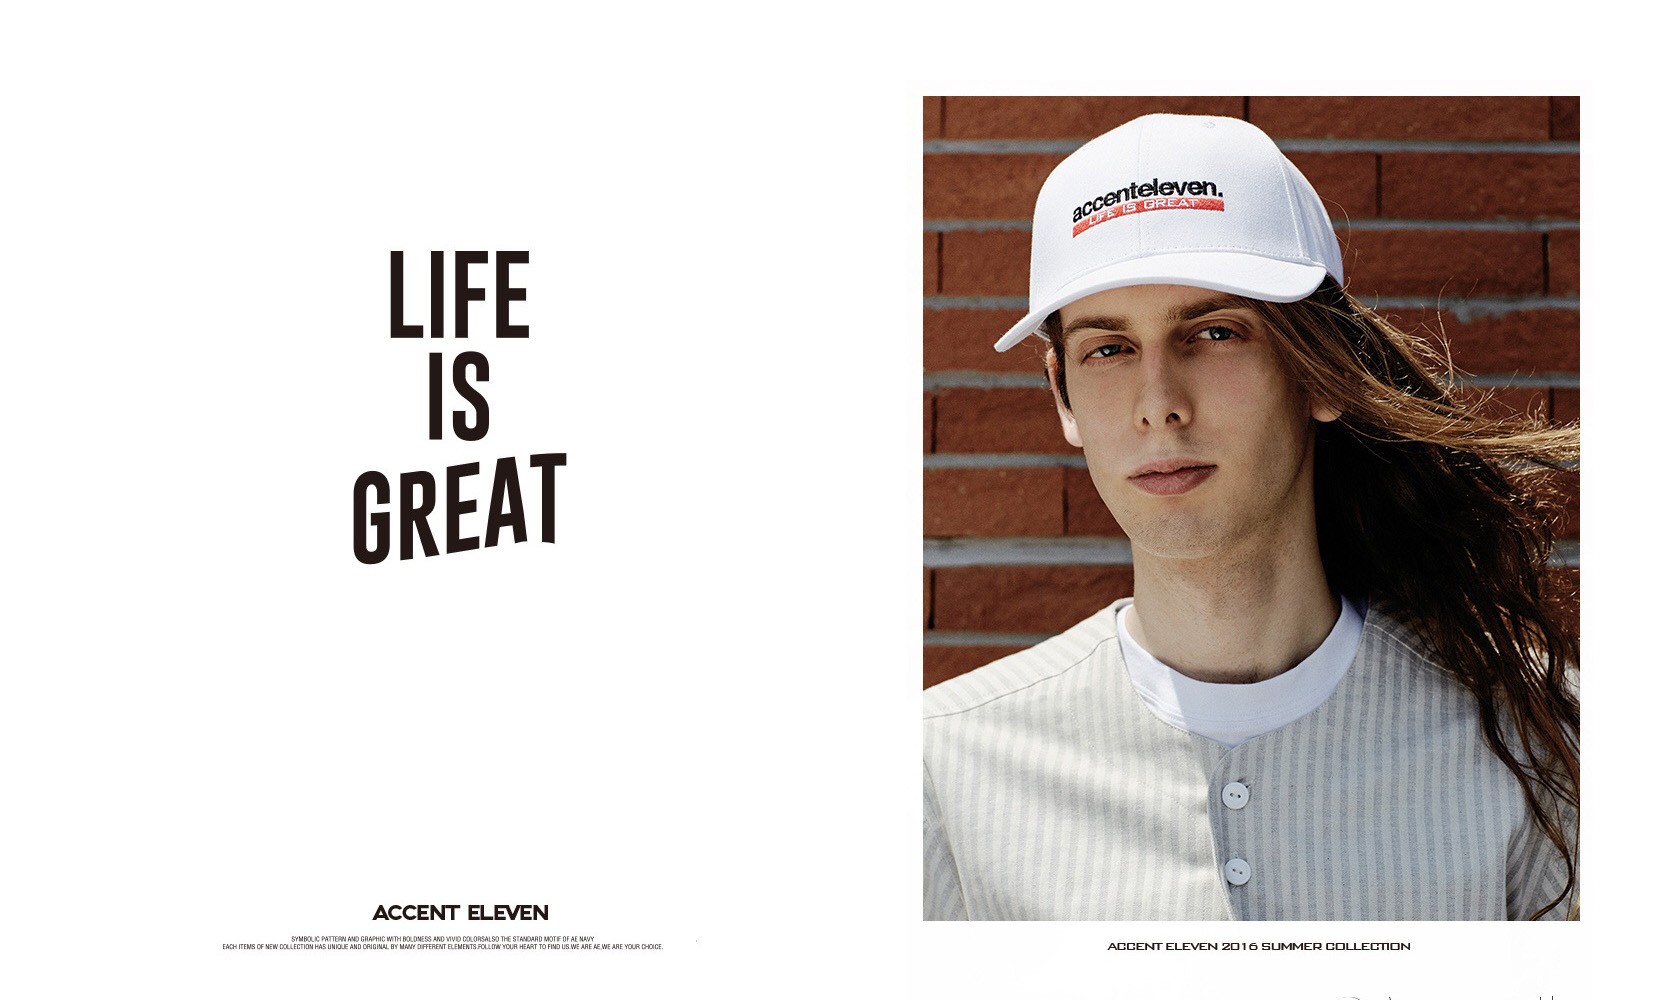 Accent Eleven 2016 夏季 “LIFE IS GREAT” 造型 Lookbook 发布